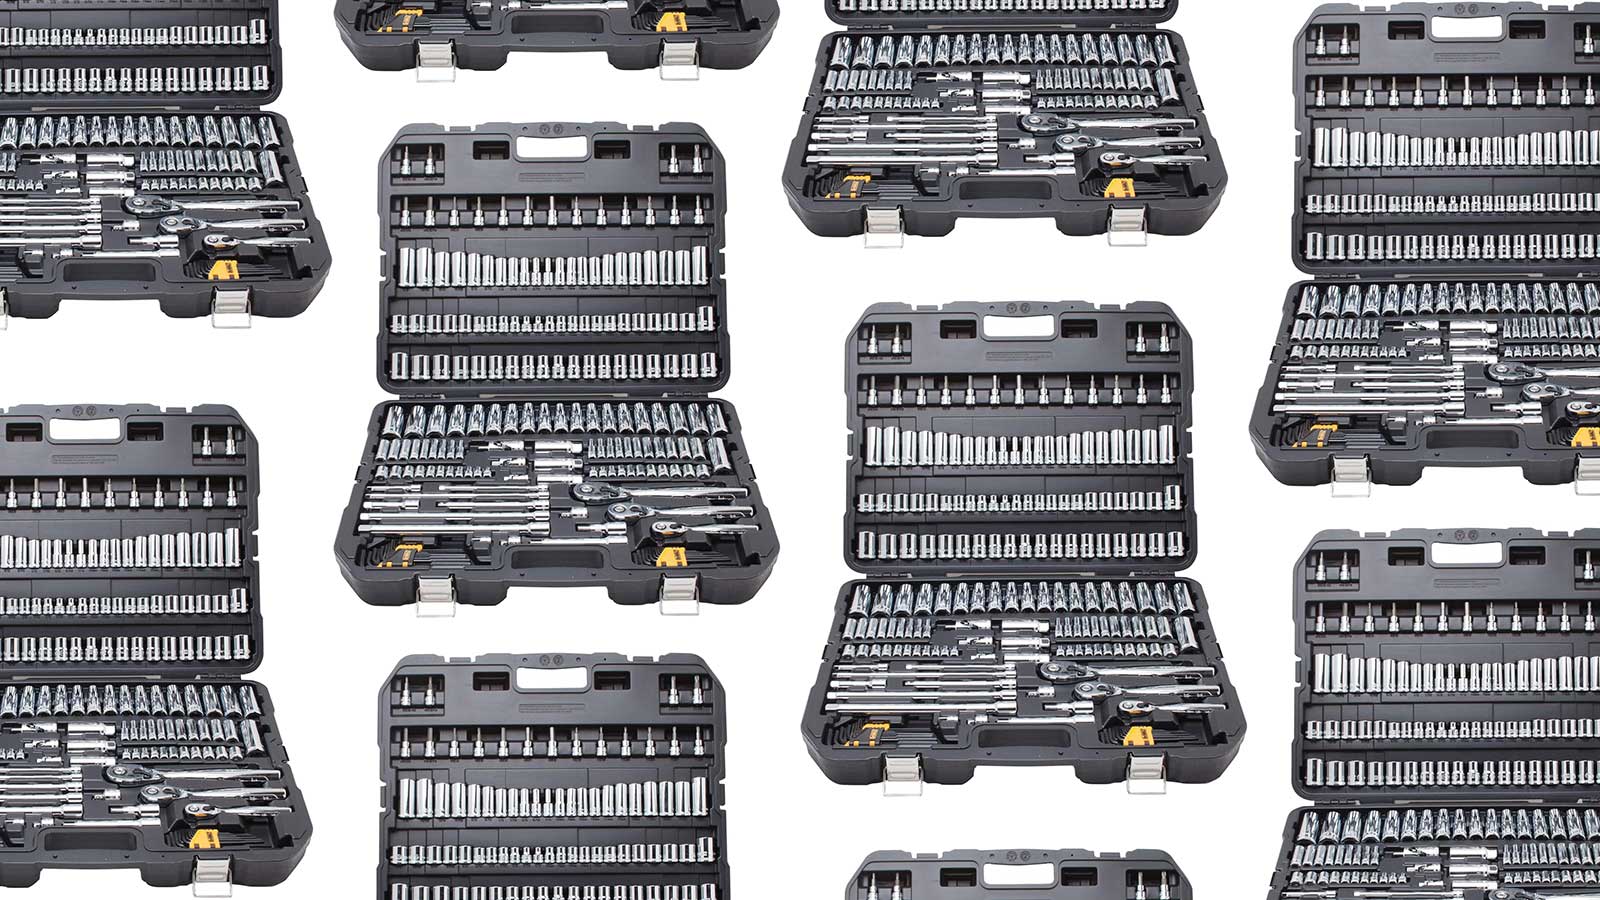 An array of DeWalt mechanics tool sets arranged in a pattern on a plain background.